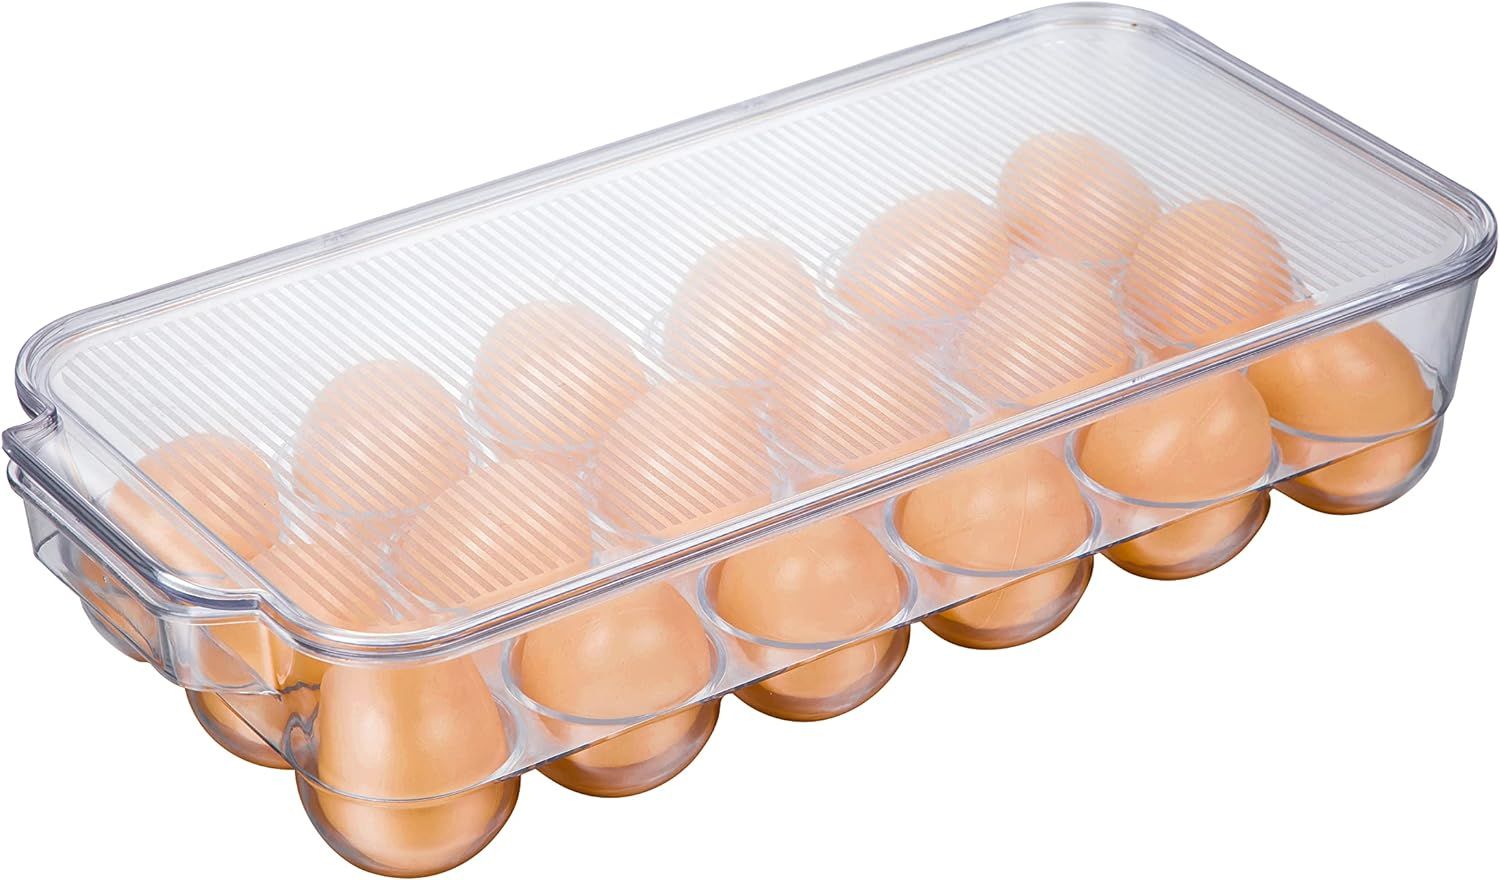 JINAMART Stackable Plastic Egg Holder fridge organizer amazon kitchen finds kitchen deals sales | Amazon (US)